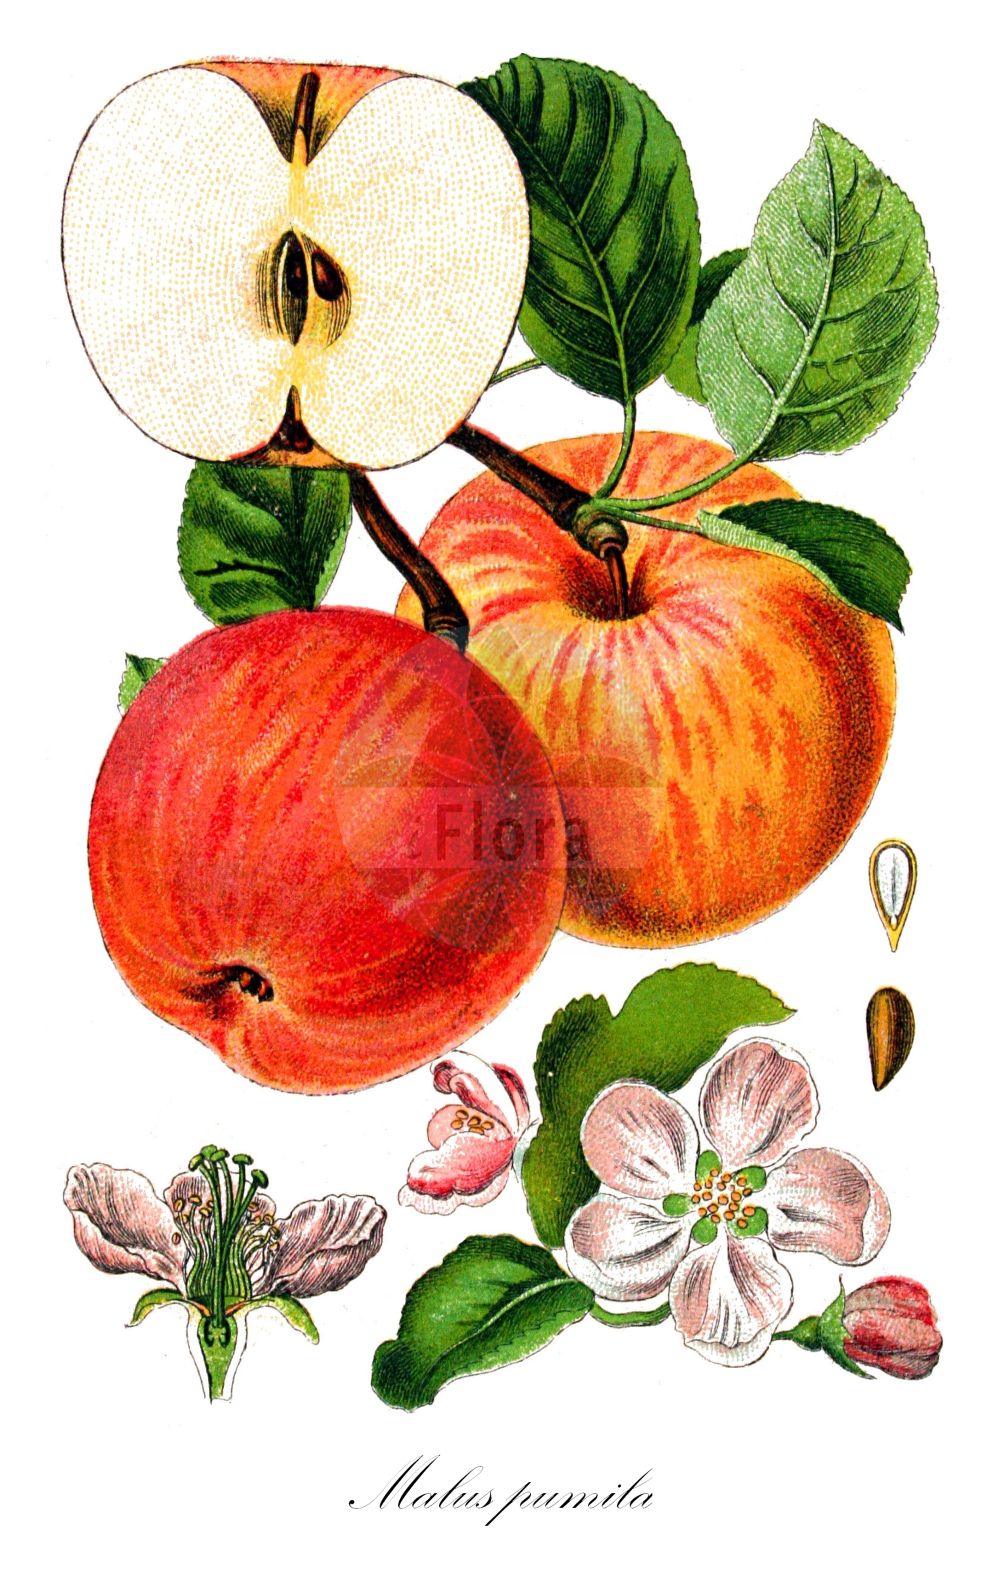 Historische Abbildung von Malus pumila (Garten-Apfel - Orchard Apple). ---- Historical Drawing of Malus pumila (Garten-Apfel - Orchard Apple).(Malus pumila,Garten-Apfel,Orchard Apple,Malus dioica,Malus domestica,Malus frutescens,Malus paradisiaca,Malus pumila,Malus sativa,Malus sieversii,Malus sylvestris,Pyrenia malus,Pyrus cavillea,Pyrus dioica,Pyrus epirotica,Pyrus paradisiaca,Pyrus prasomila,Pyrus pumila,Pyrus sieversii,Pyrus sylvestris,Sorbus malus,Garten-Apfel,Kultur-Apfel,Orchard Apple,Malus,Apfel,Apple,Rosaceae,Rosengewächse,Rose family,Sturm (1796f))